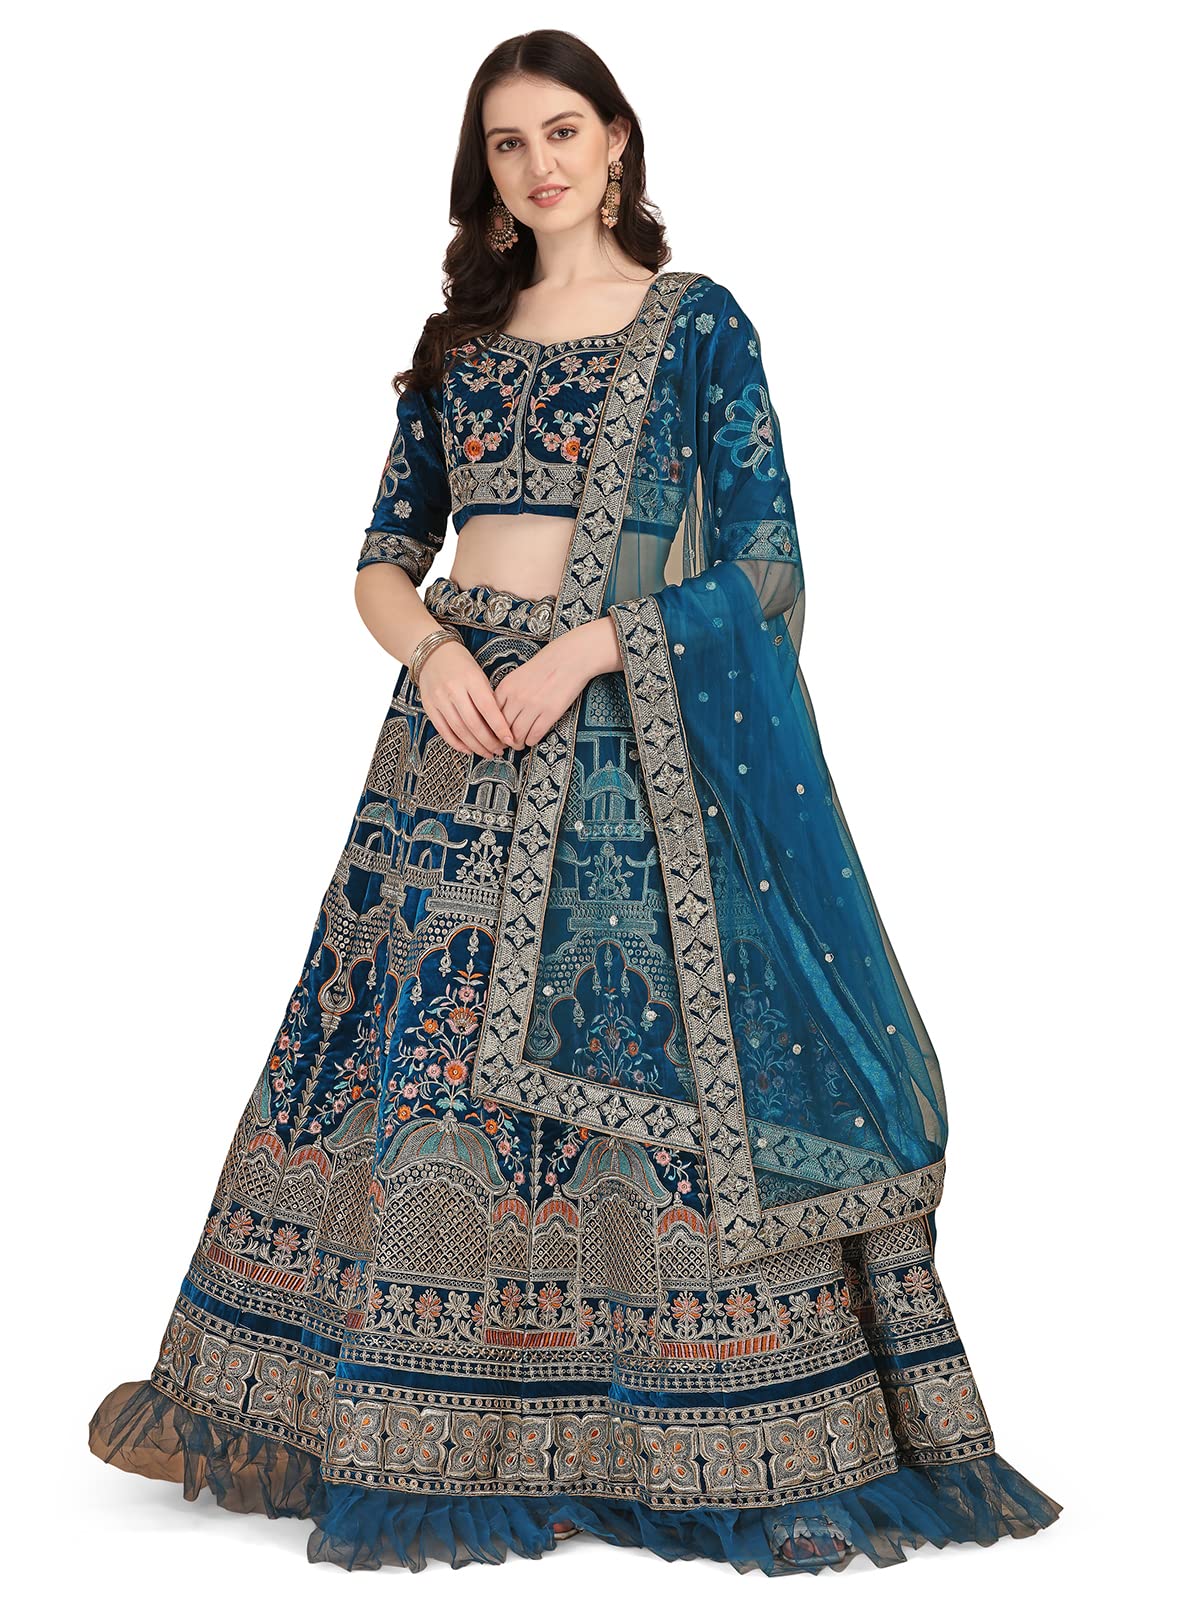 Amrutam Fab Women's Bridalwear Blue Color Sequence & Coding Embroidery Work Lehenga choli (LC-3003)